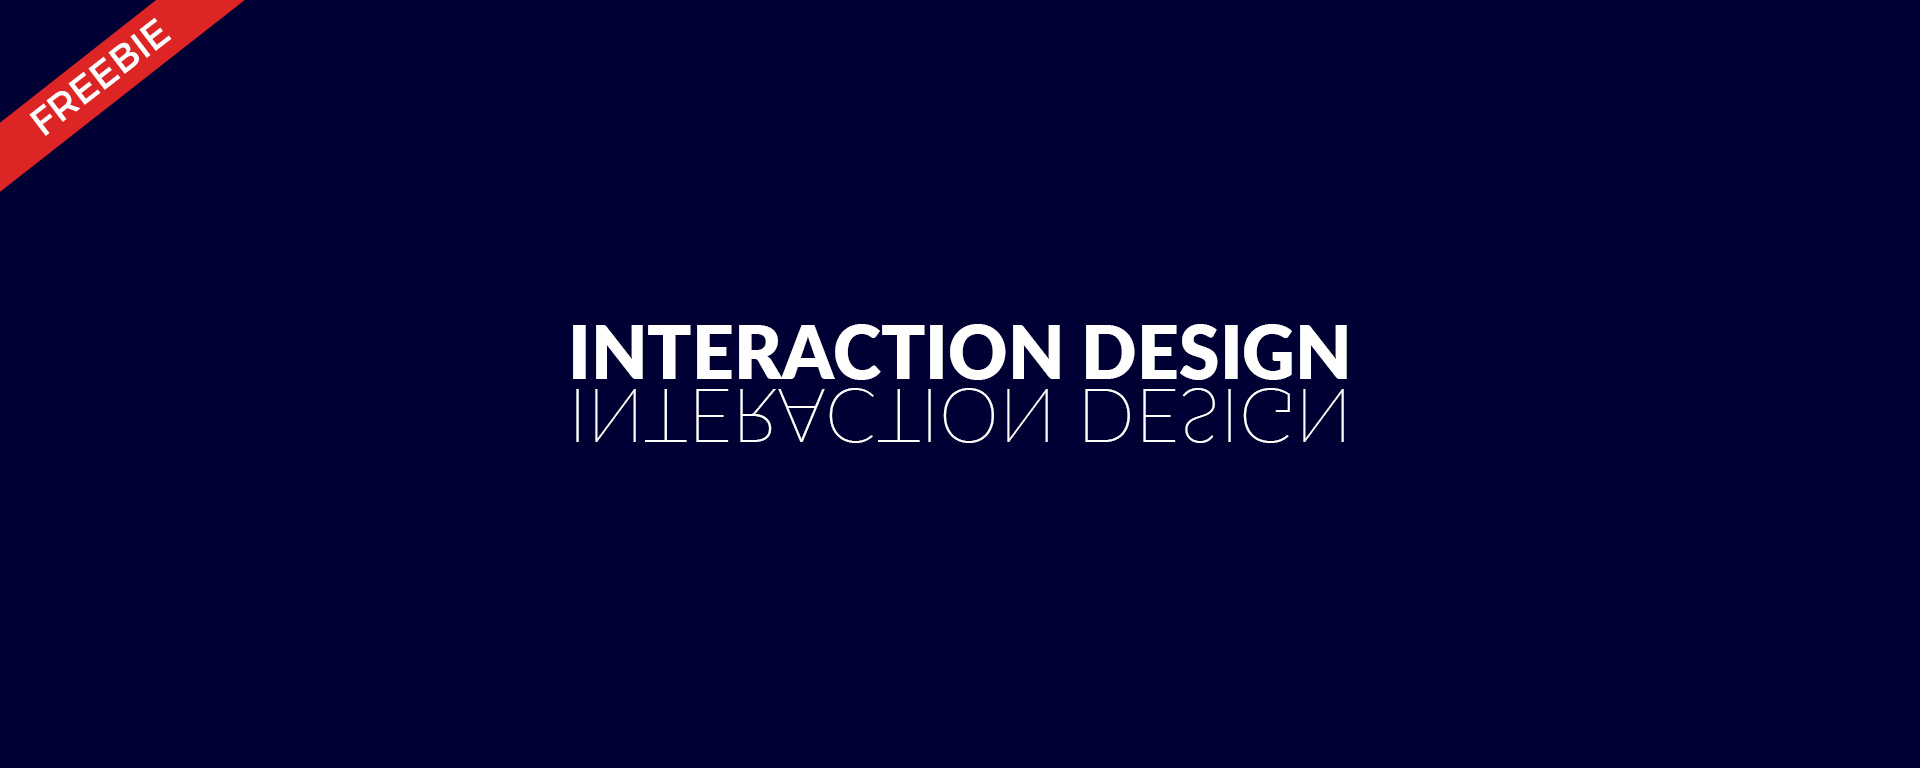 Interaction Design FREEBIES